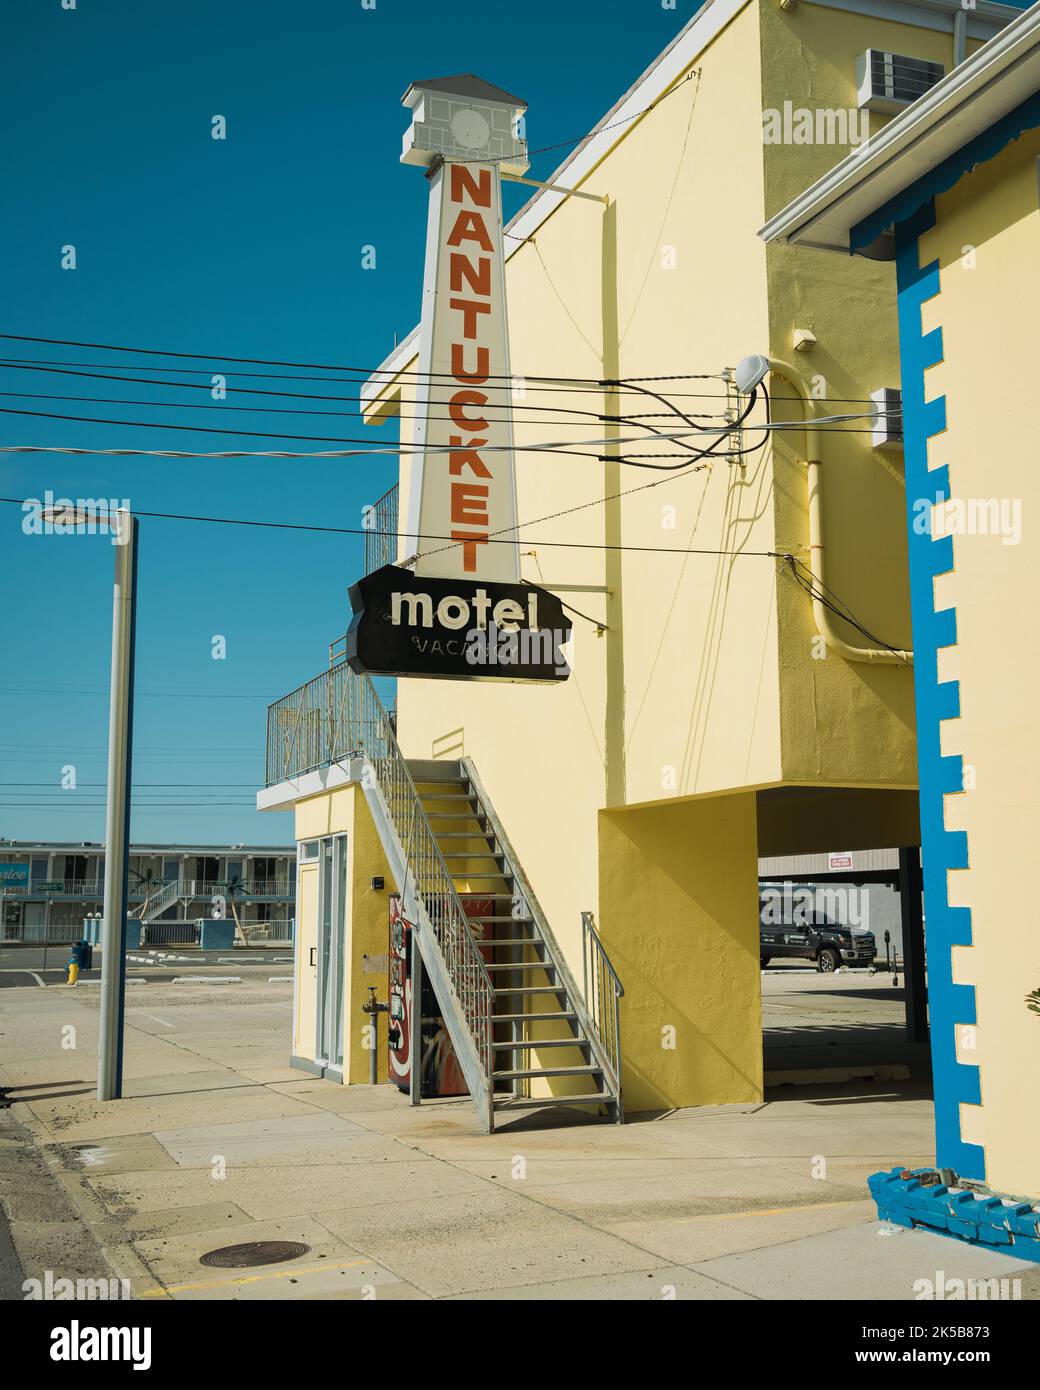 Nantucket Motel vintage segno, Wildwood, New Jersey Foto Stock